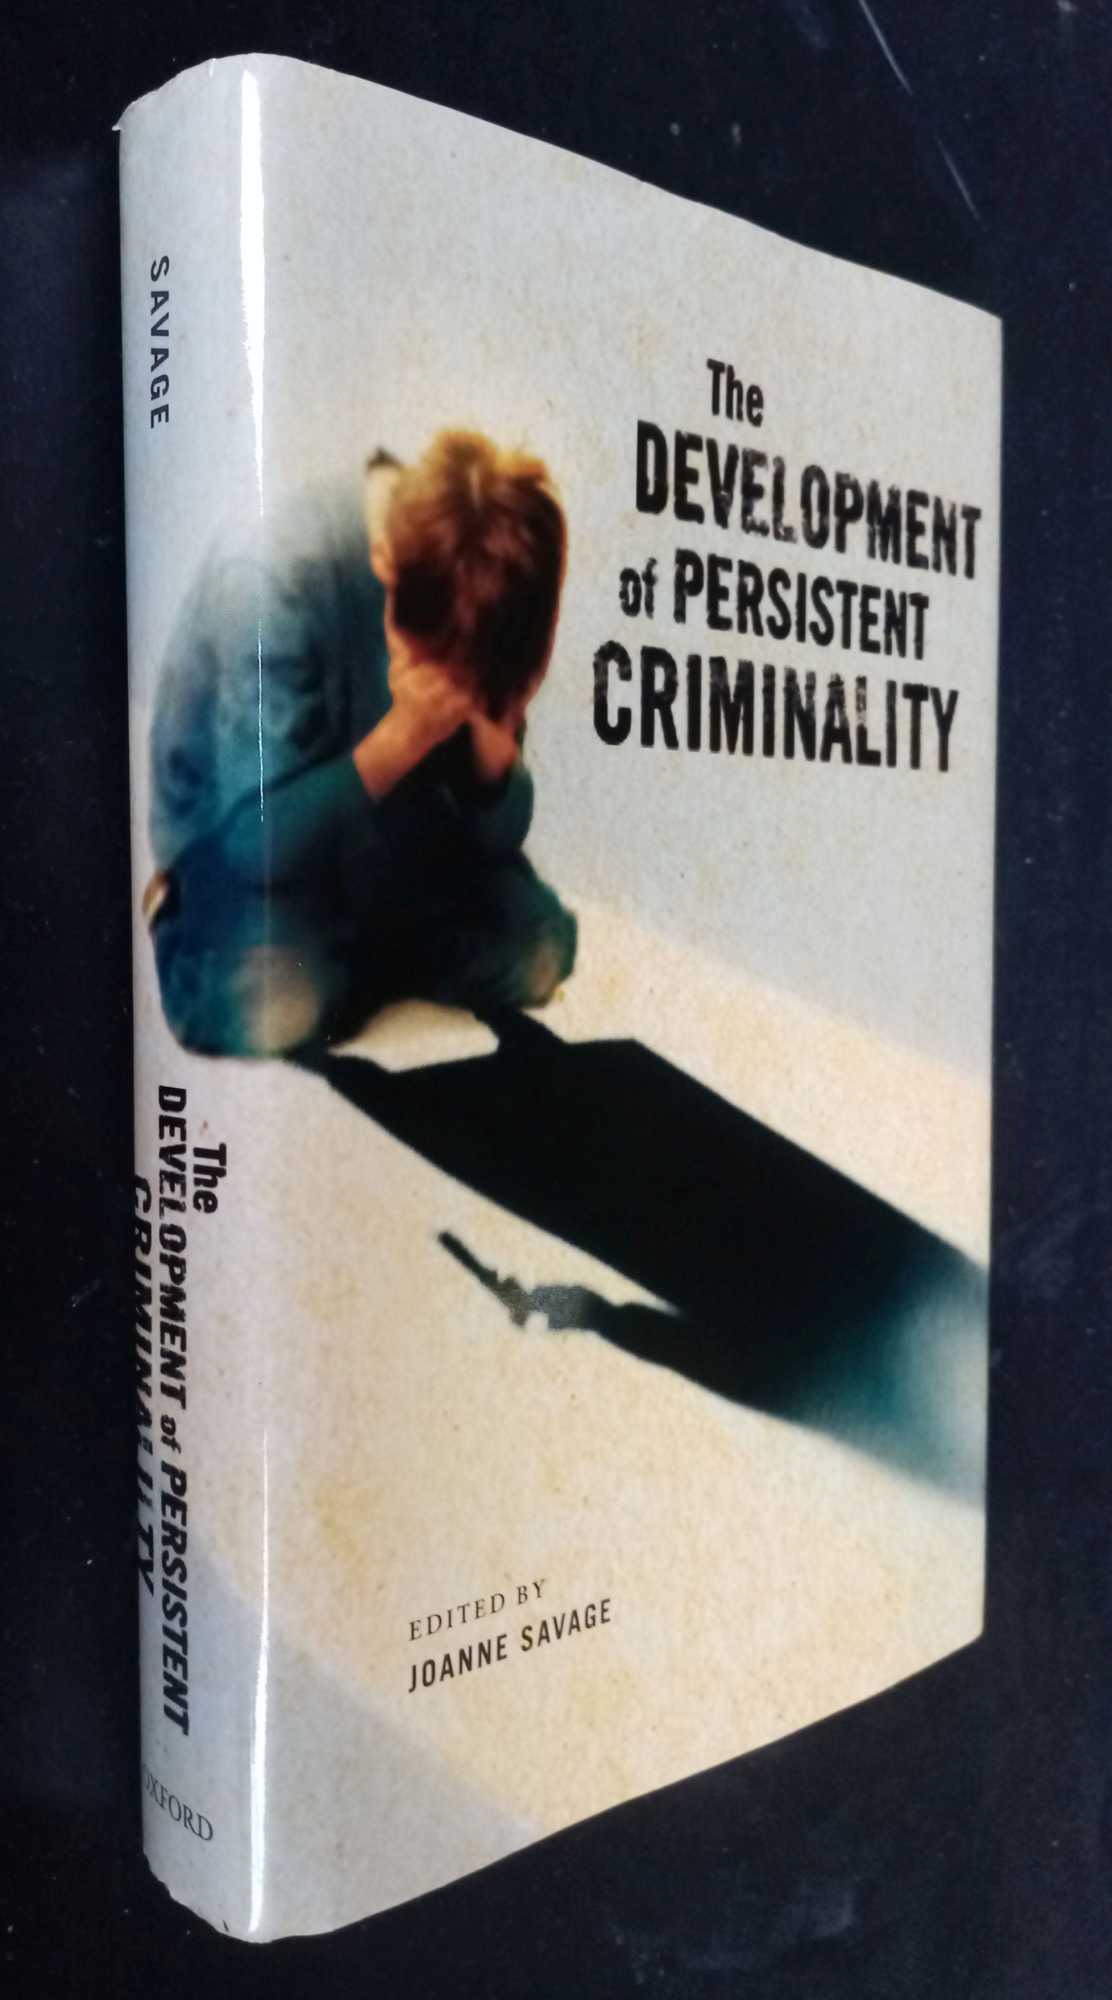 J Savage, ed. - The Development of Persistent Criminality